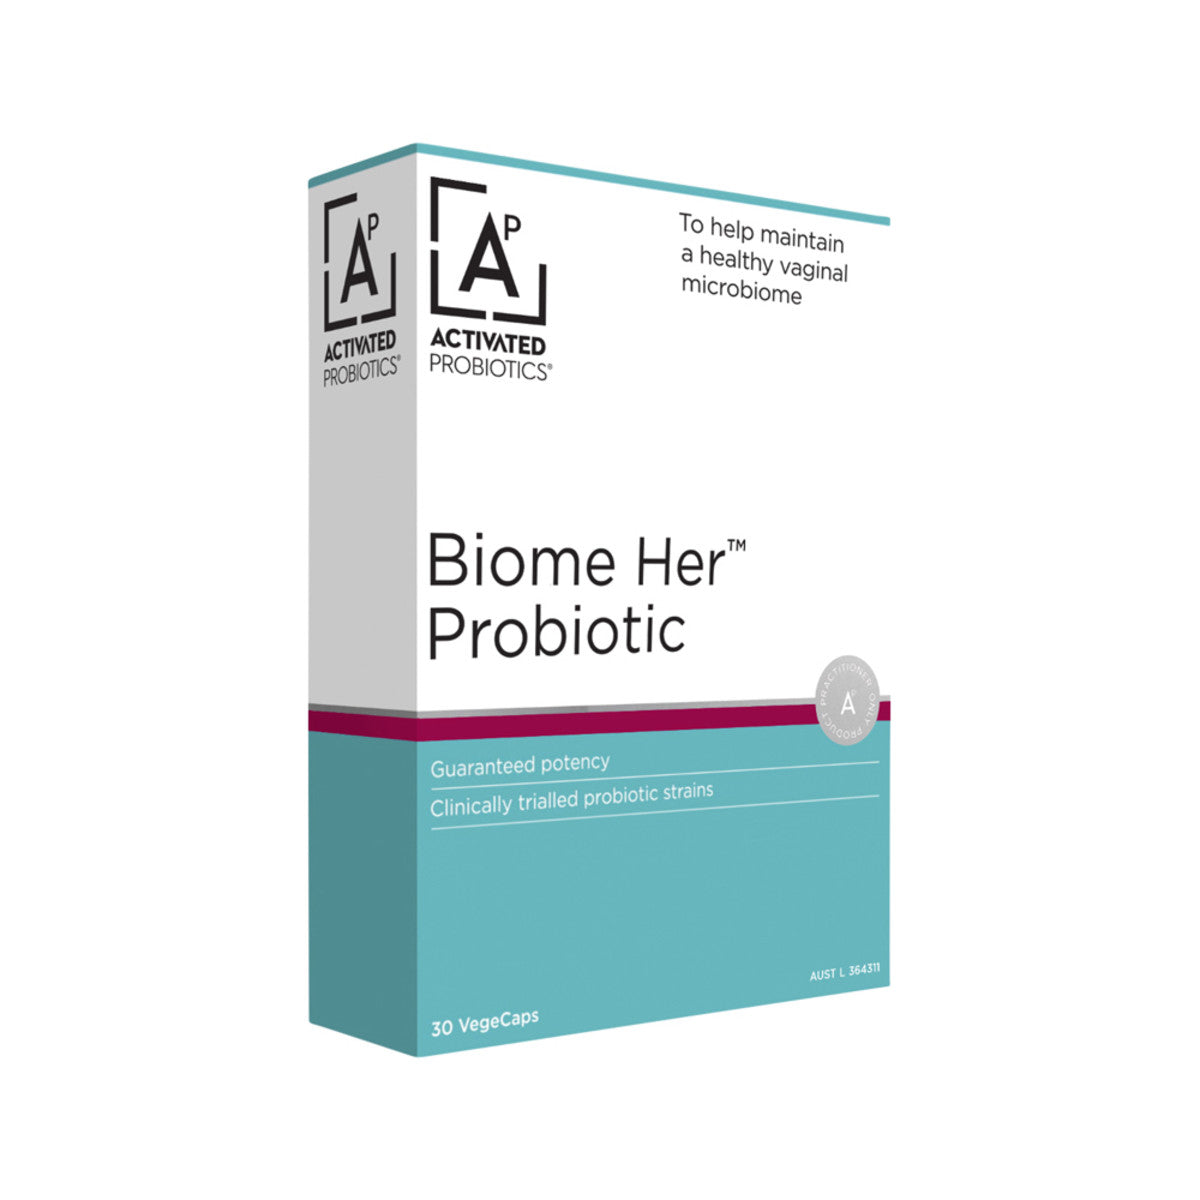 Activated Probiotics - Biome Her Probiotic